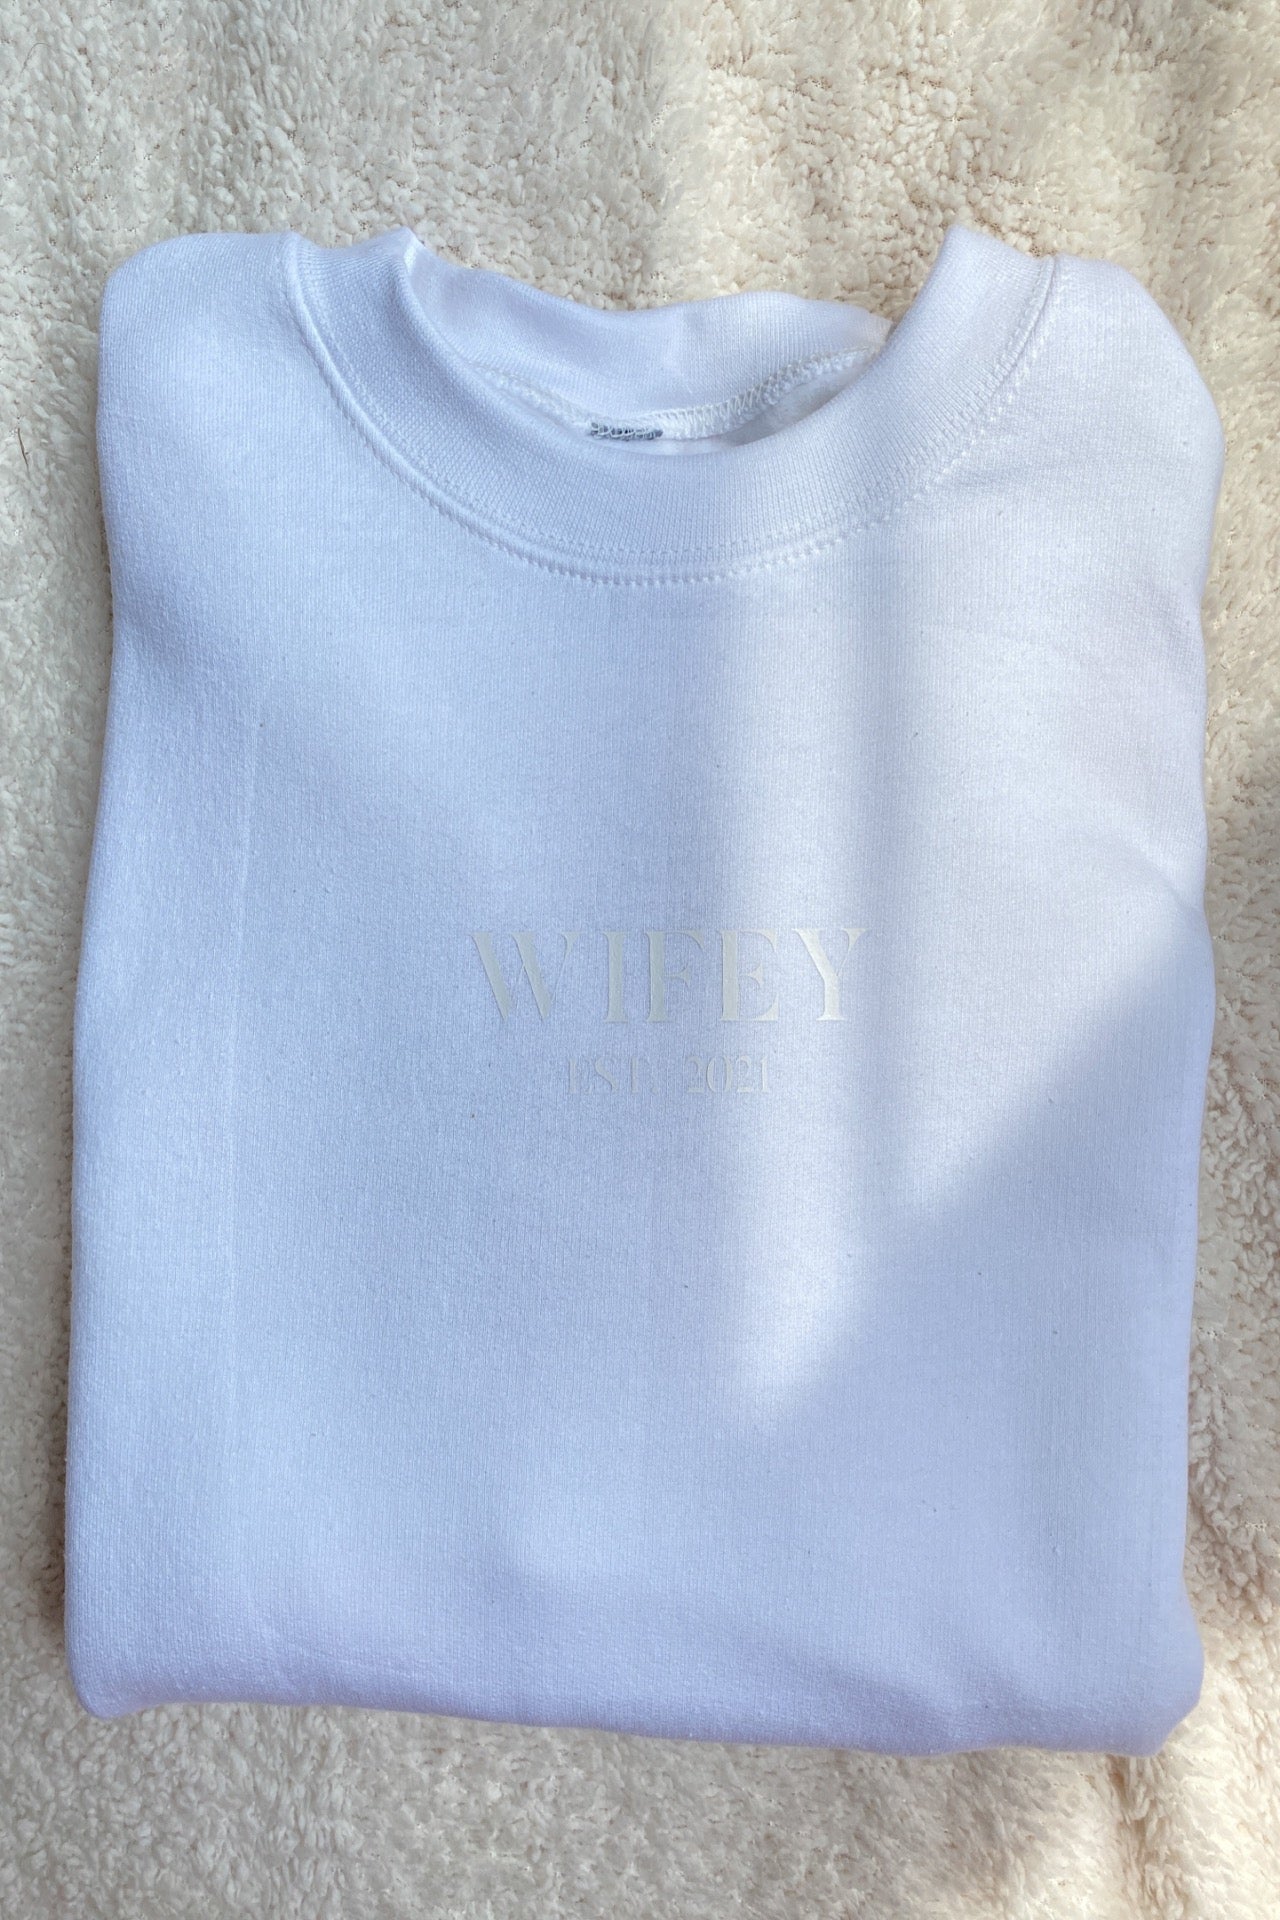 Wifey Sweater | EST. 2021